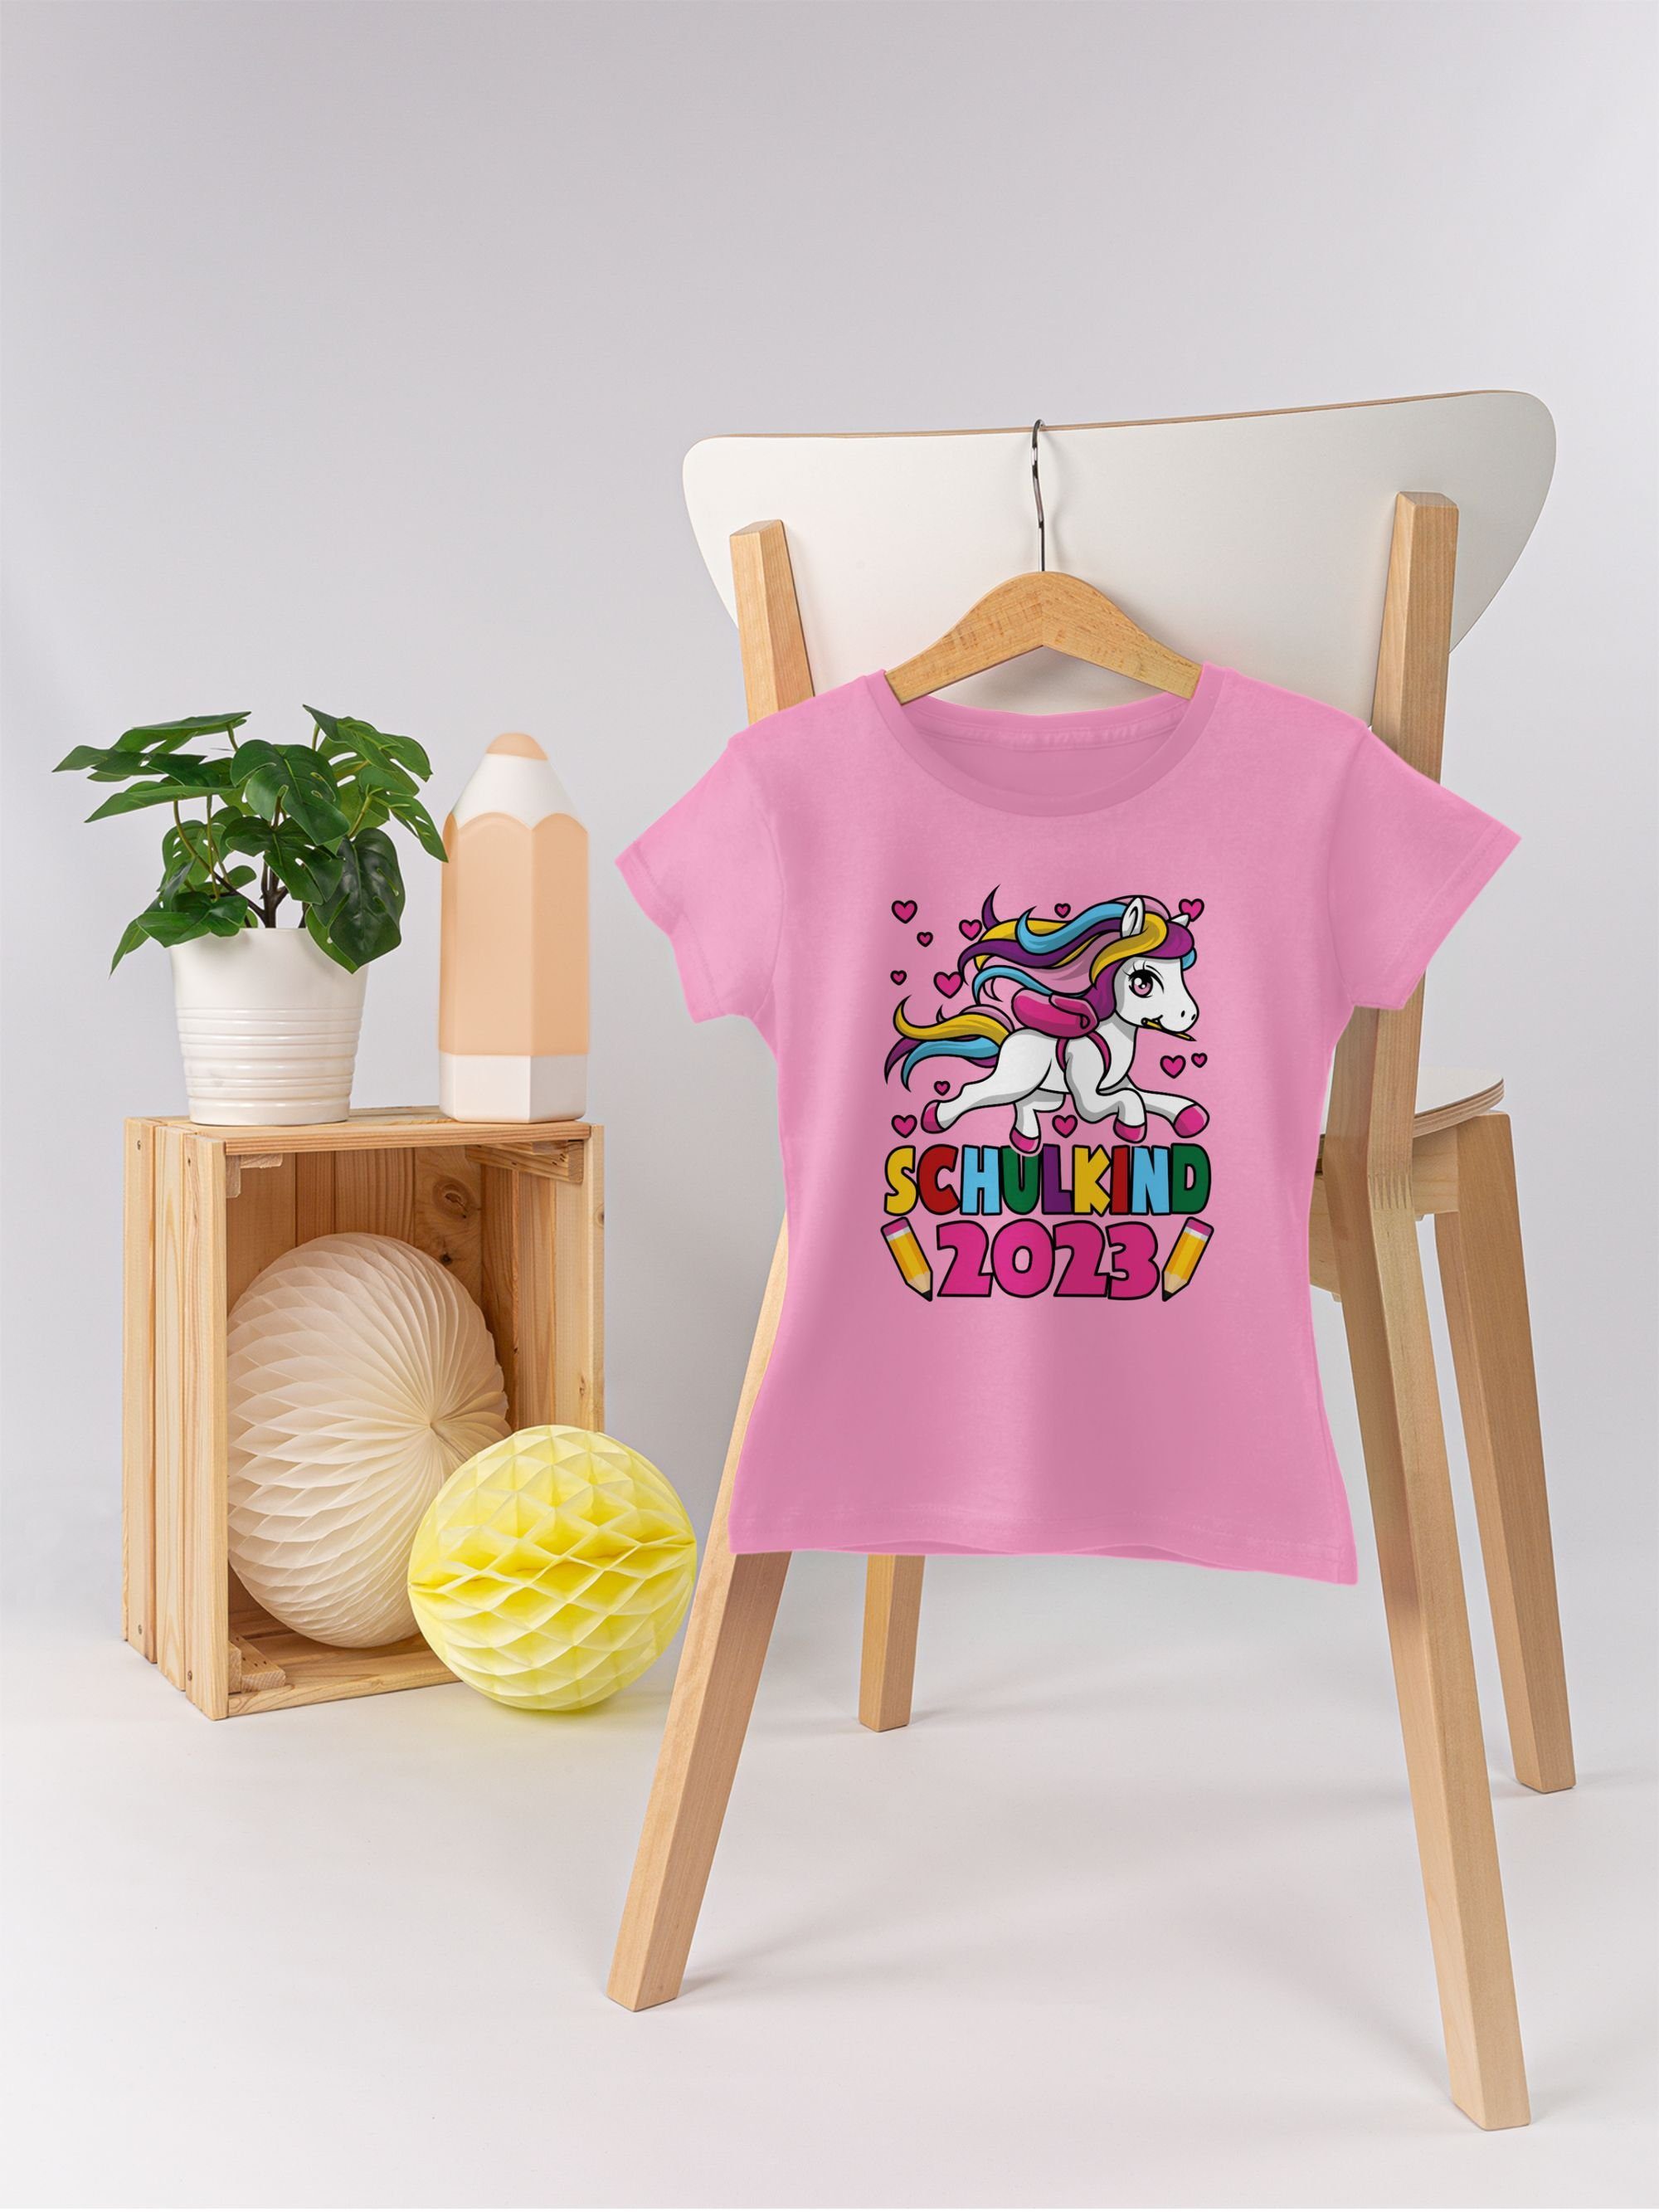 Schulkind Unicorn 2 Rosa Einschulung T-Shirt Einhorn Mädchen 2023 Shirtracer I